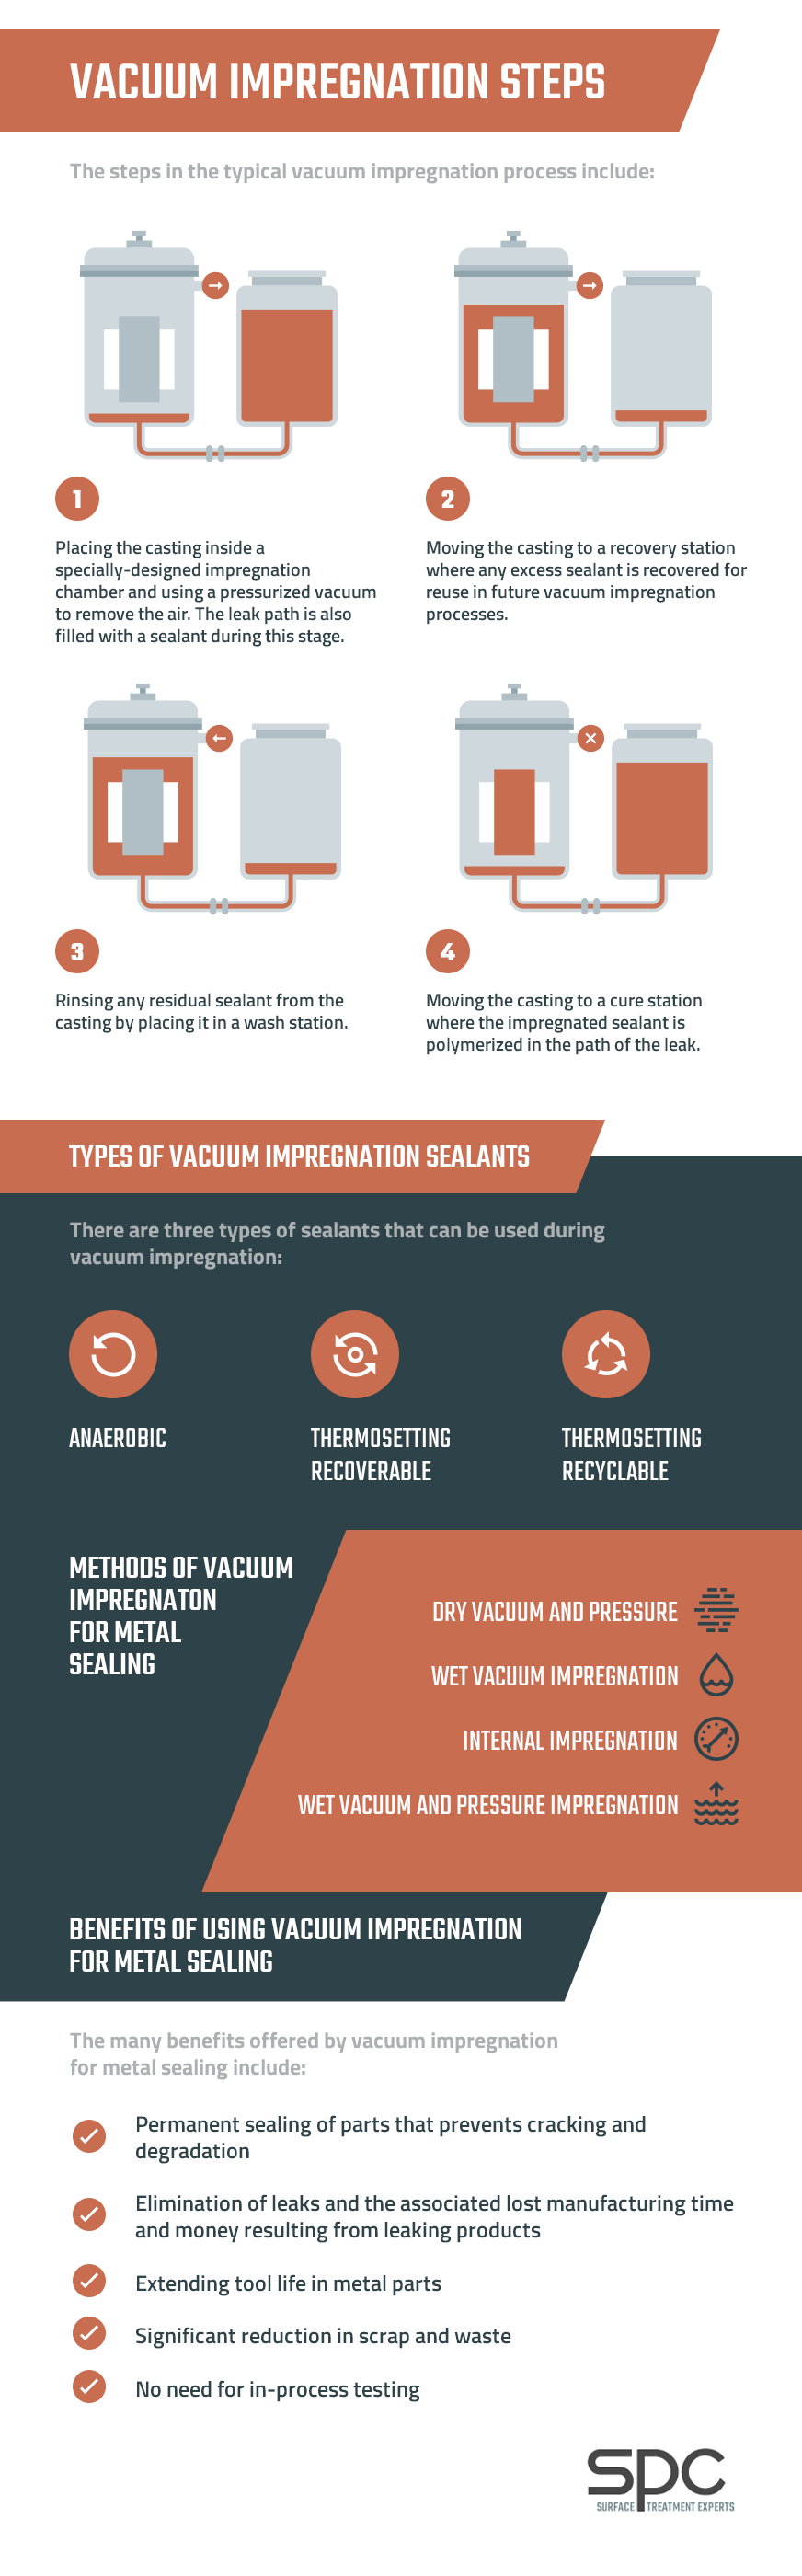 Vaccum Impregnation Steps